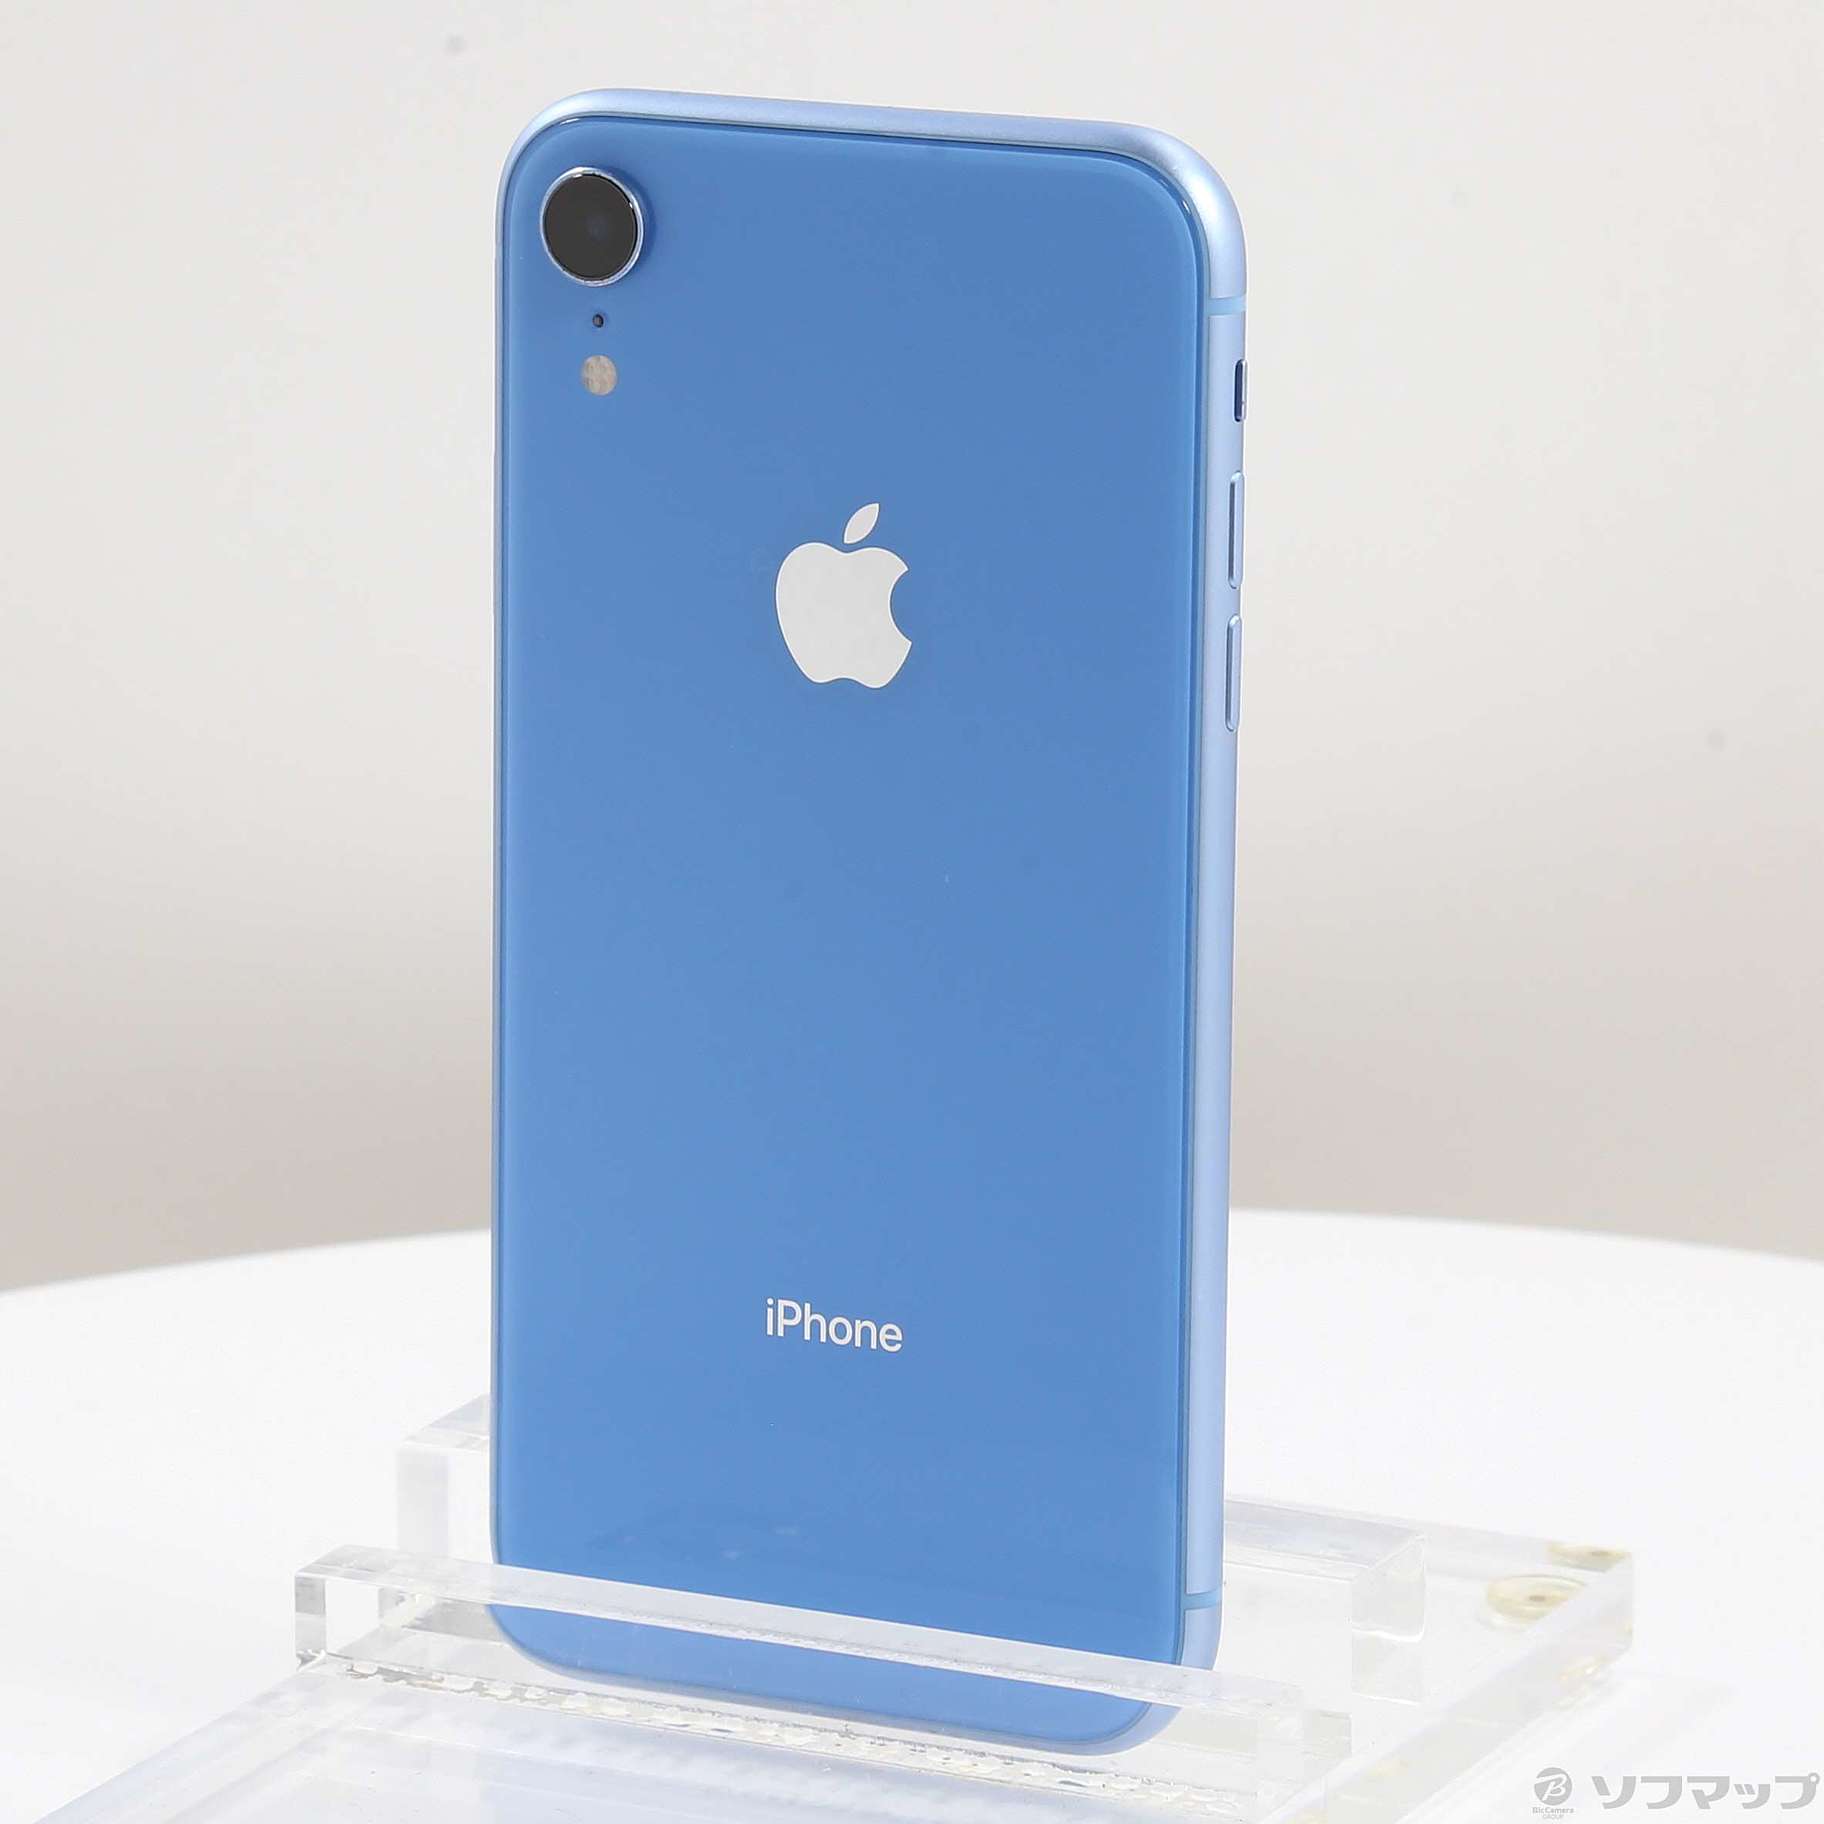 iPhone XR BLUE 64GB SIMフリー - スマートフォン本体